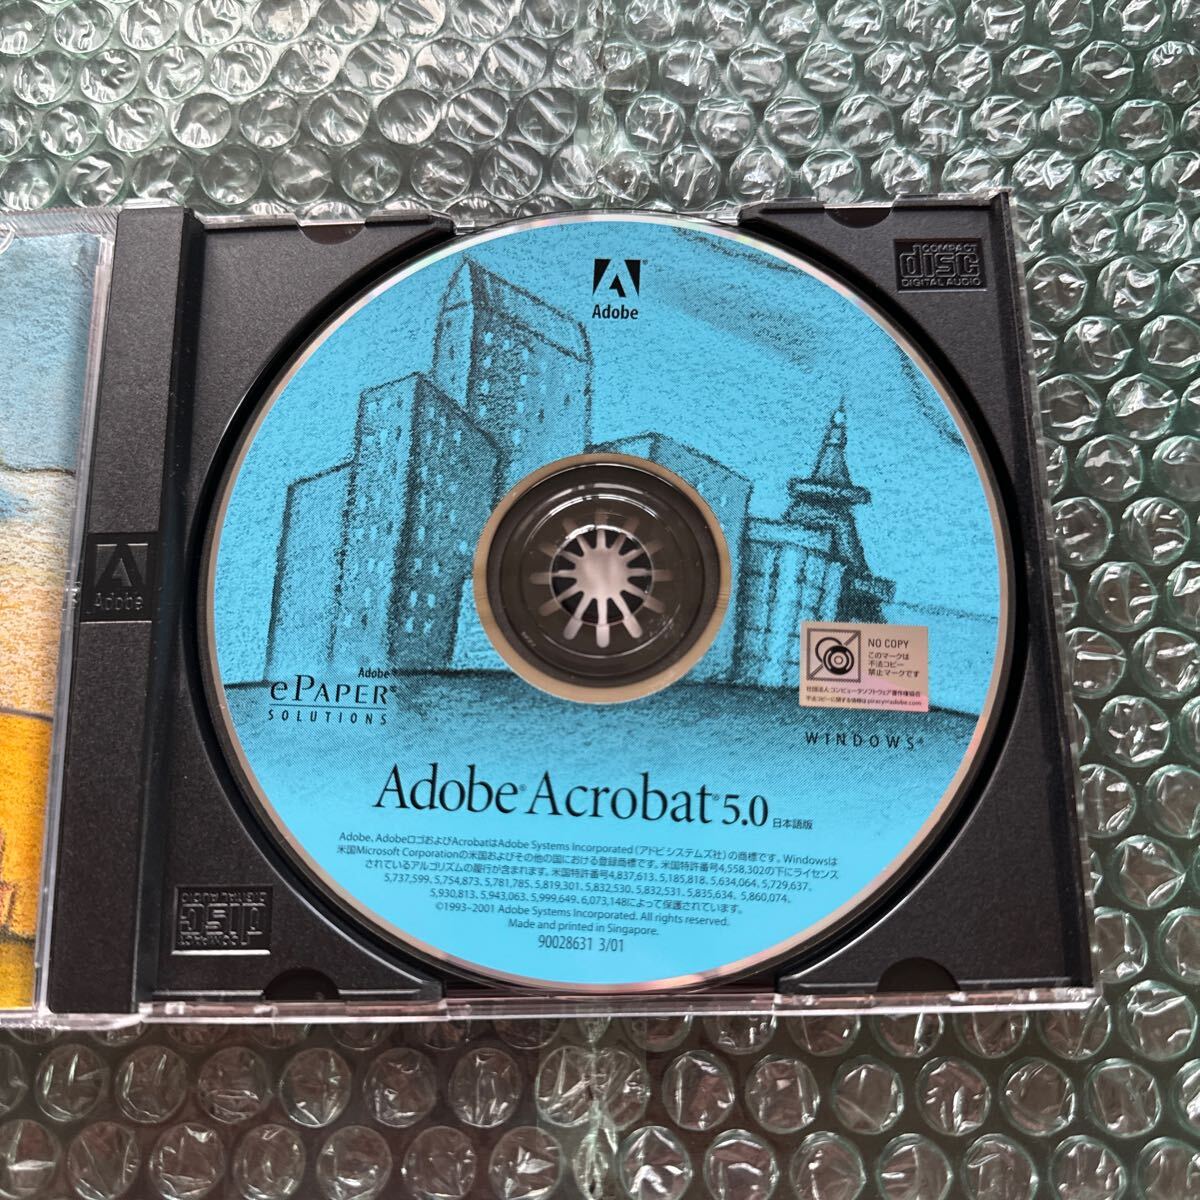 s276) Adobe Acrobat 5.0 Acroba toWindows version PDF DPI editing Japanese edition 